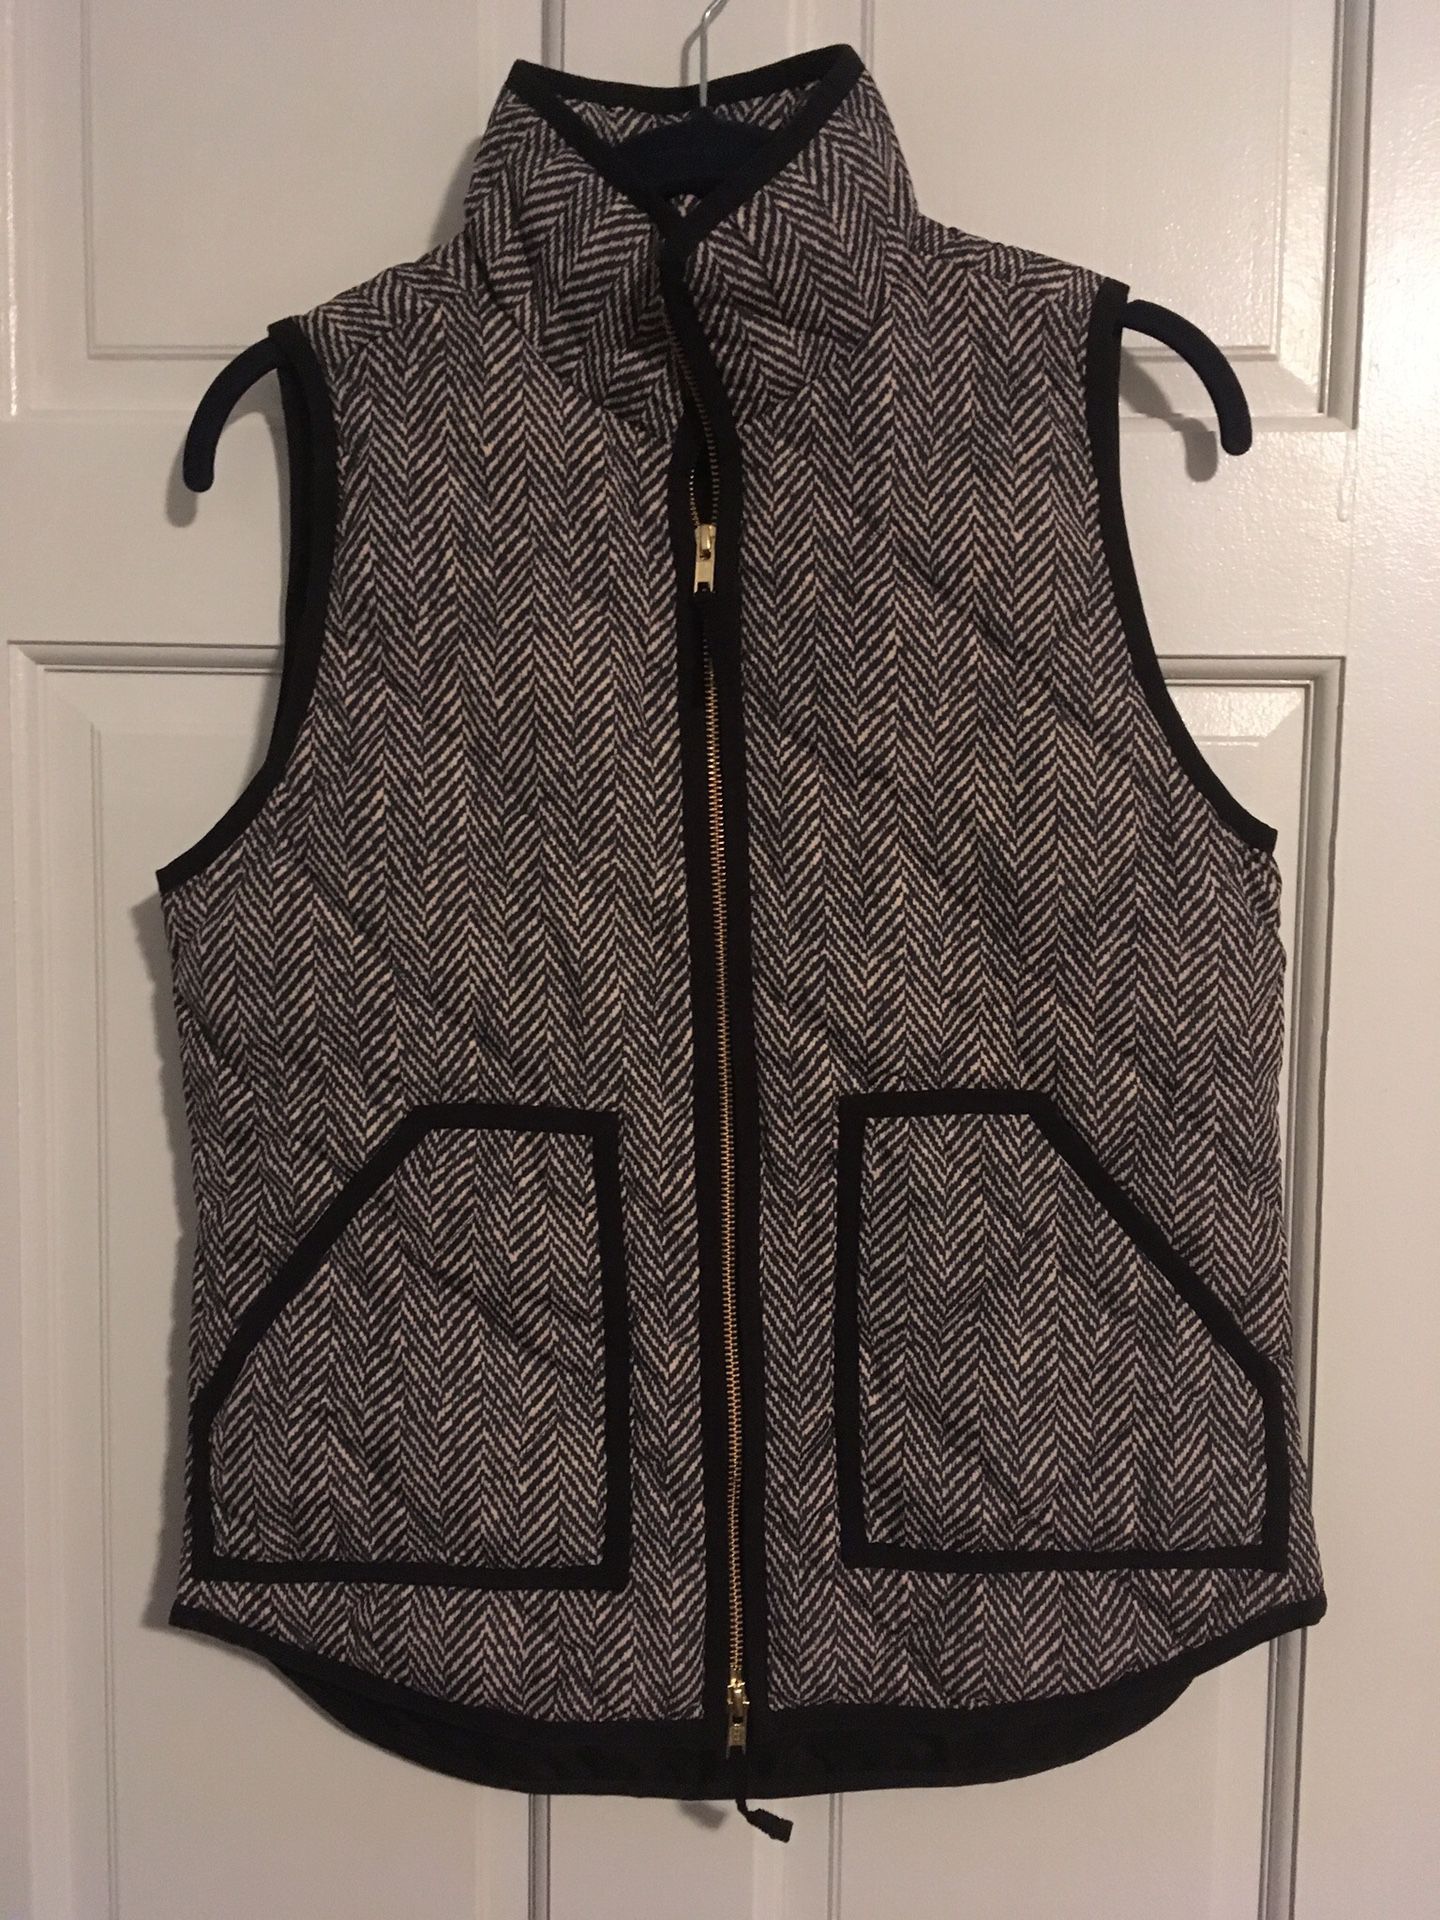 J. Crew Factory puffer vest black/cream- XS, New!